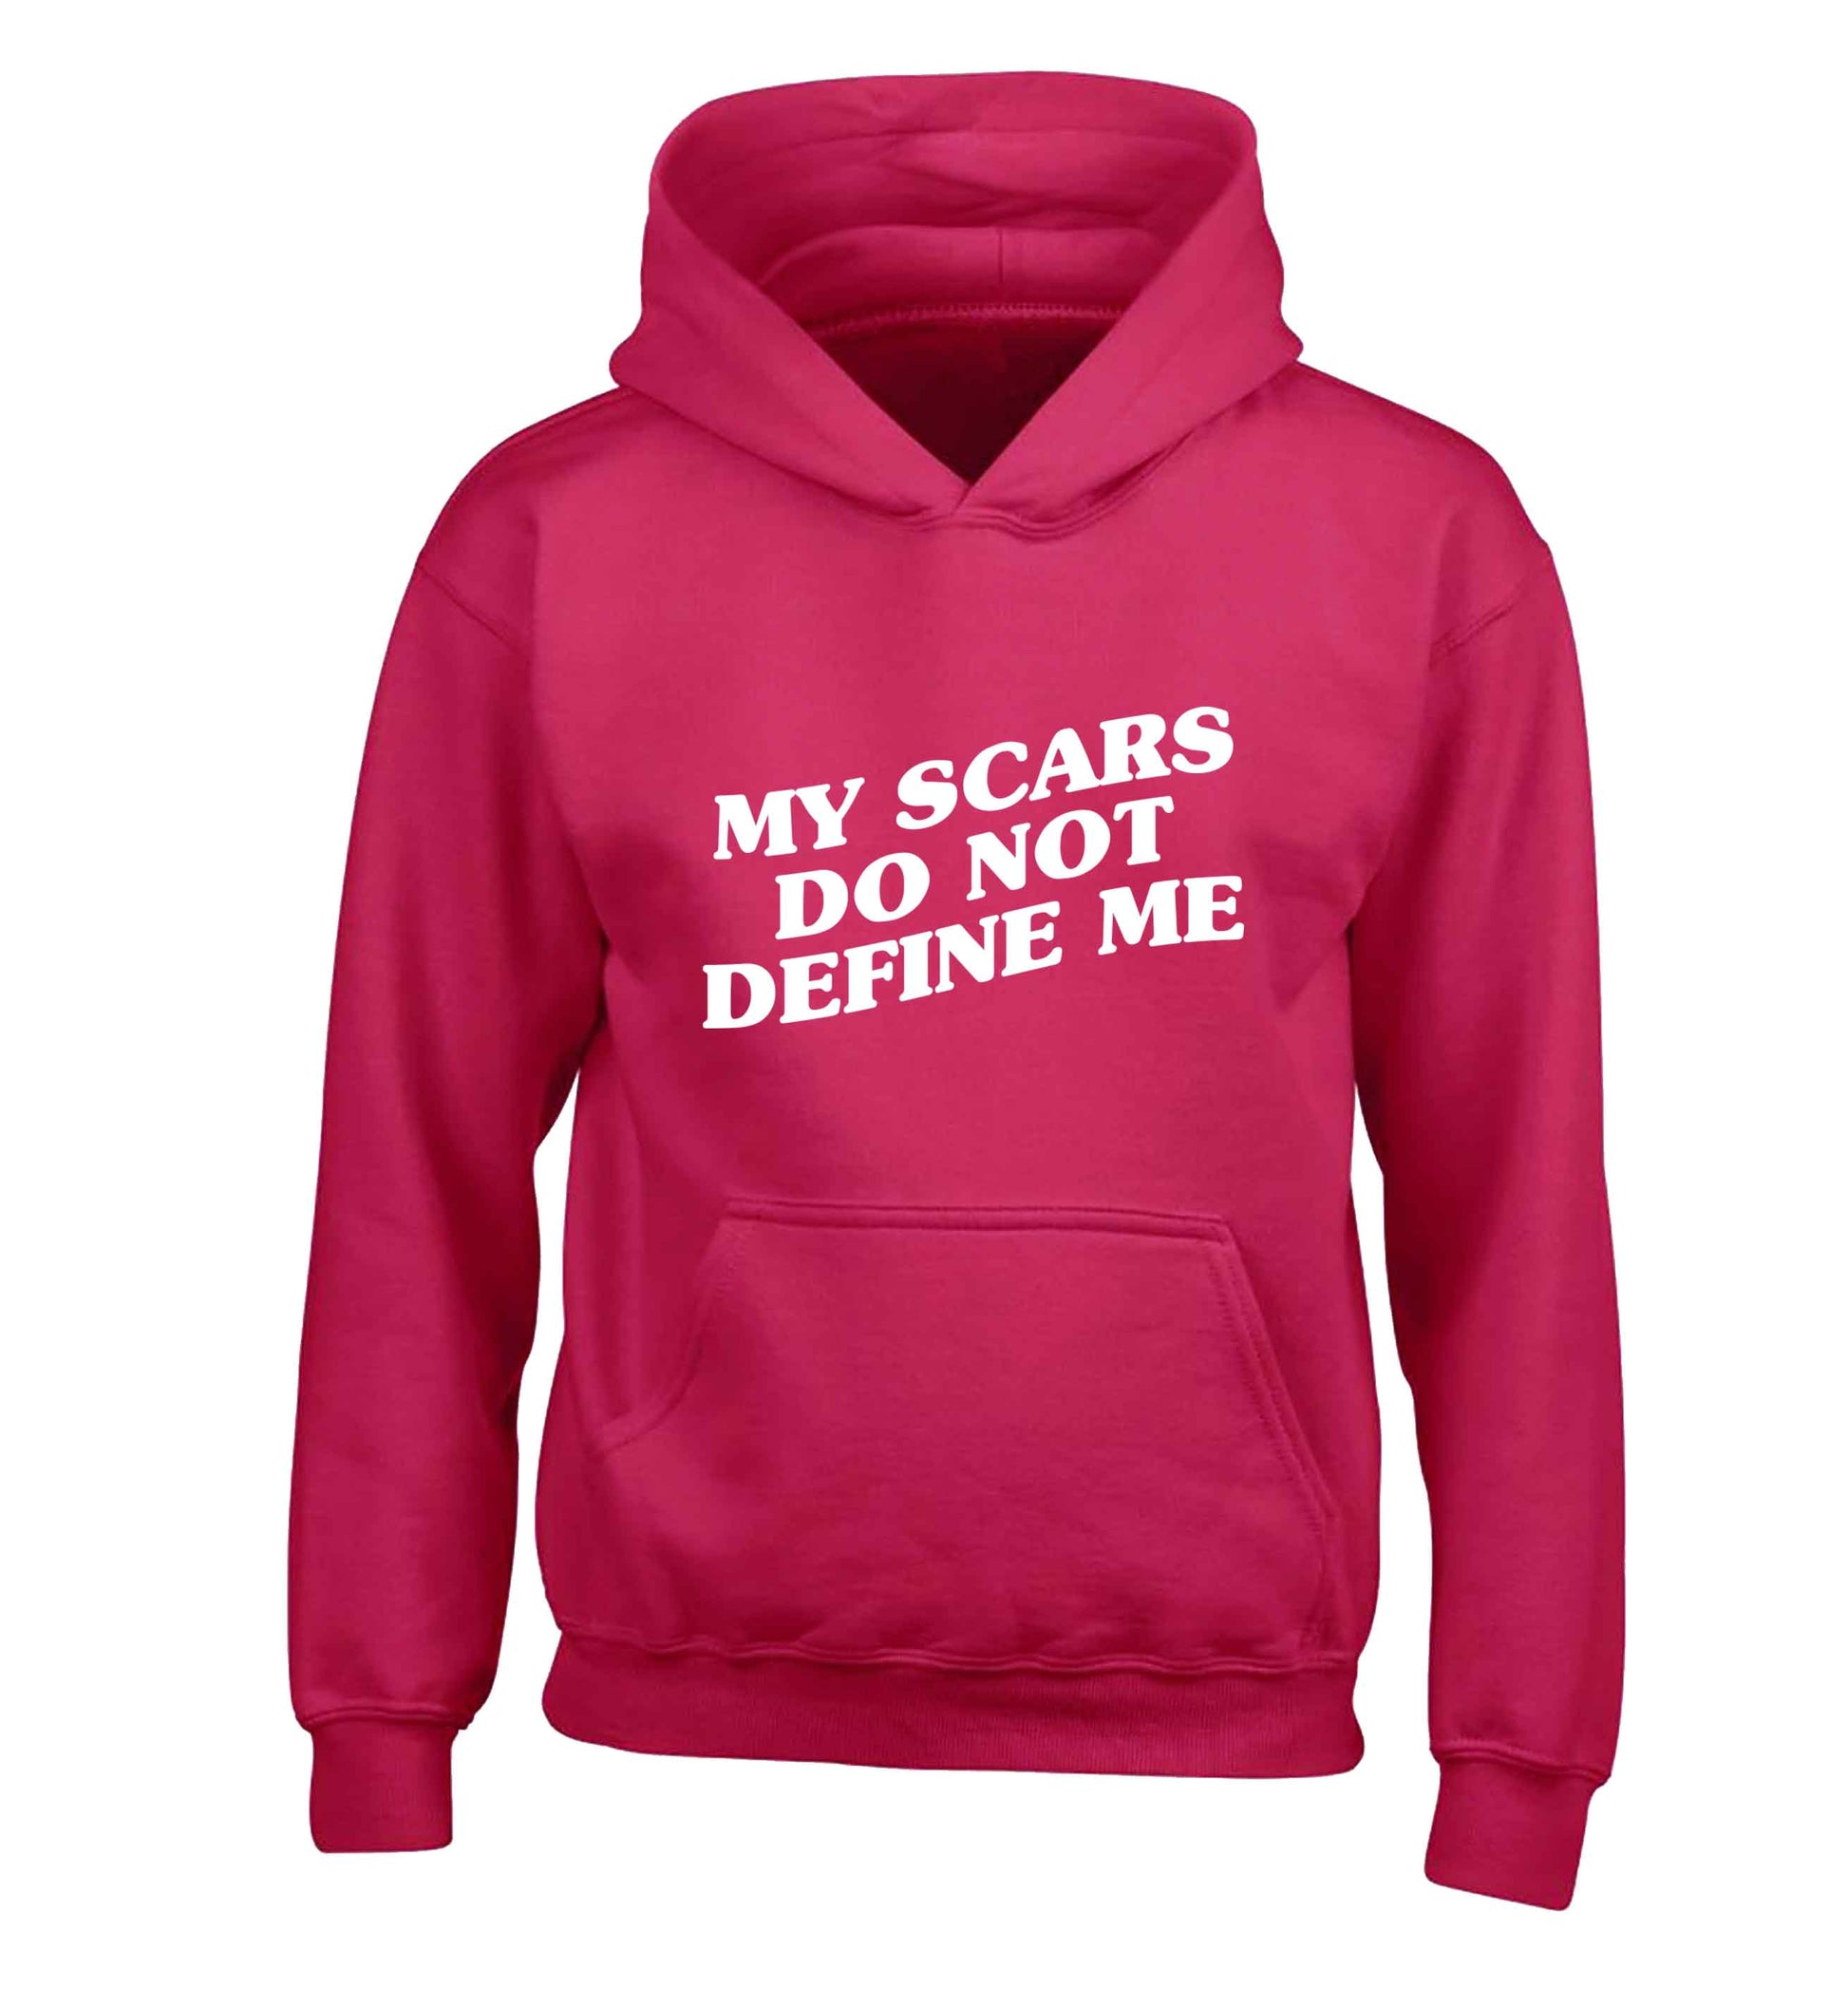 My scars do not define me children's pink hoodie 12-13 Years